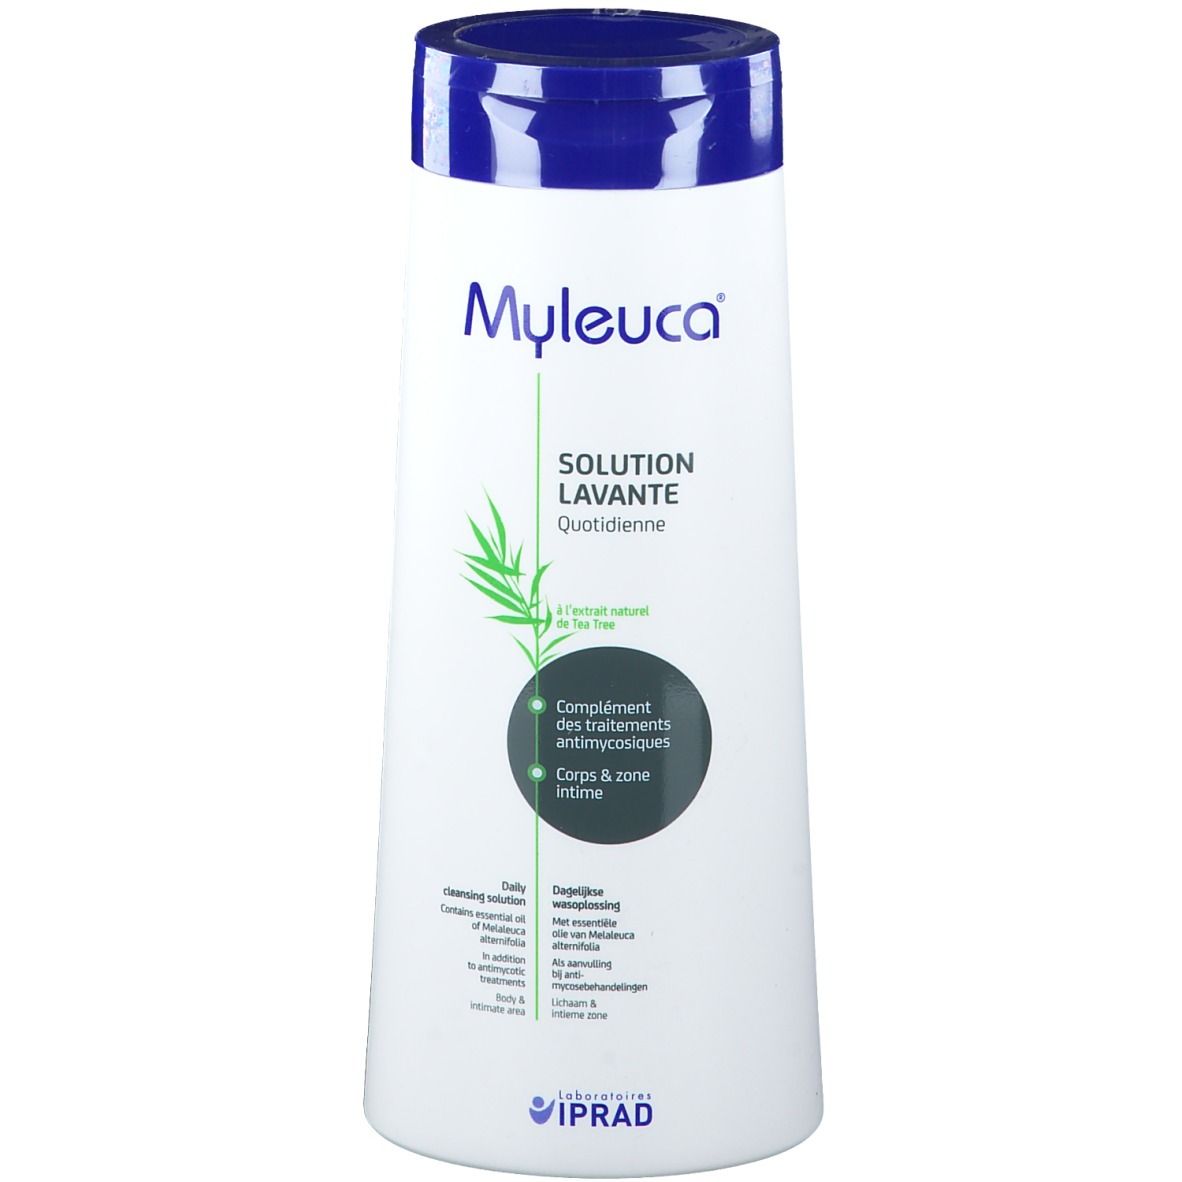 Myleuca® Solution lavante ml savon liquide